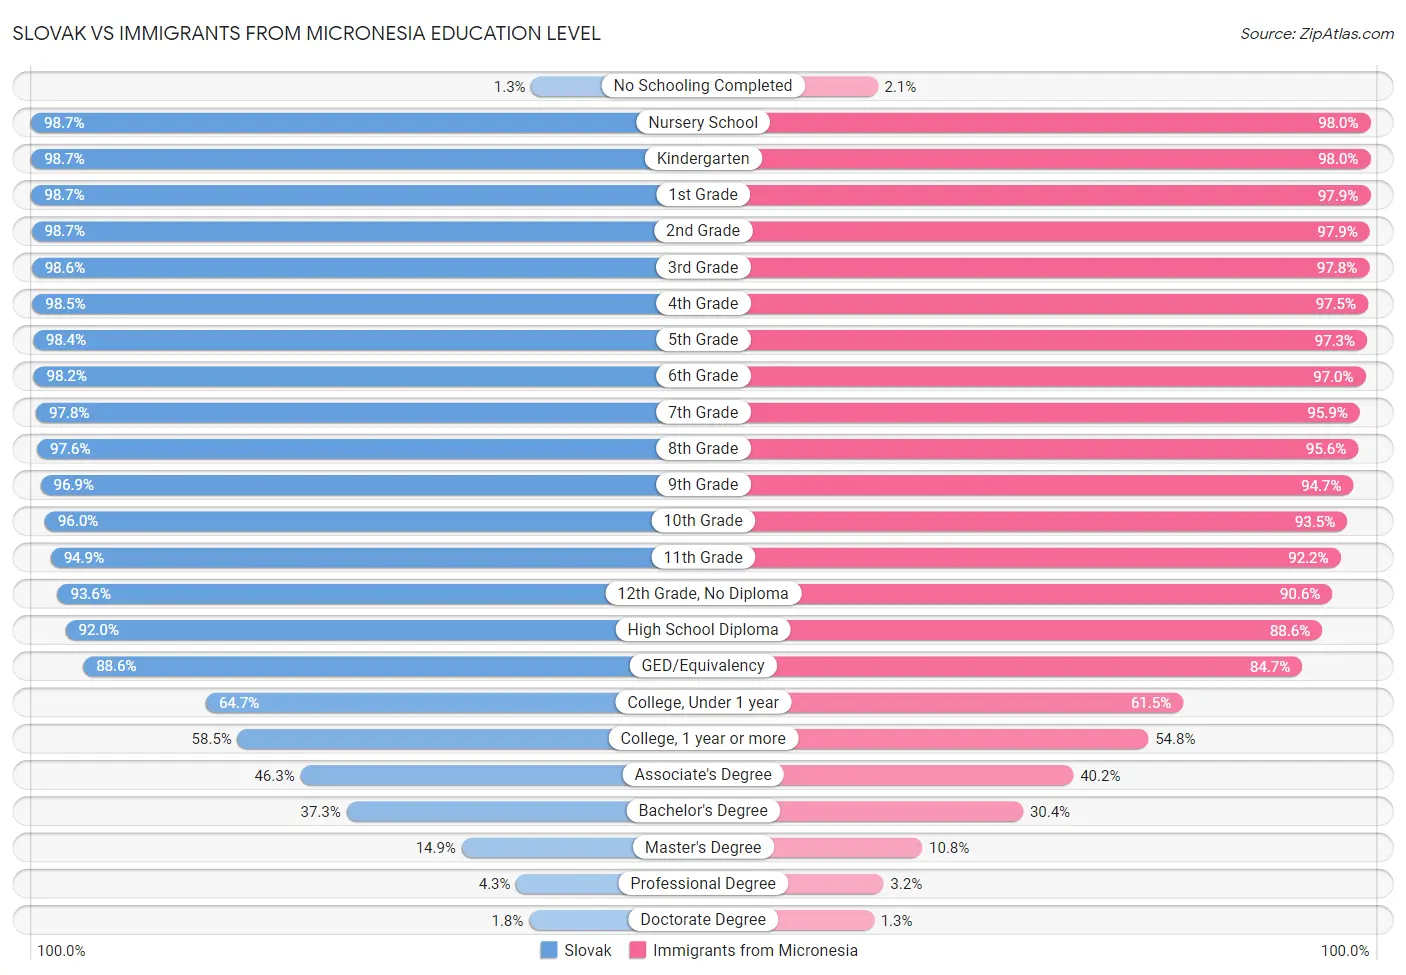 Slovak vs Immigrants from Micronesia Education Level